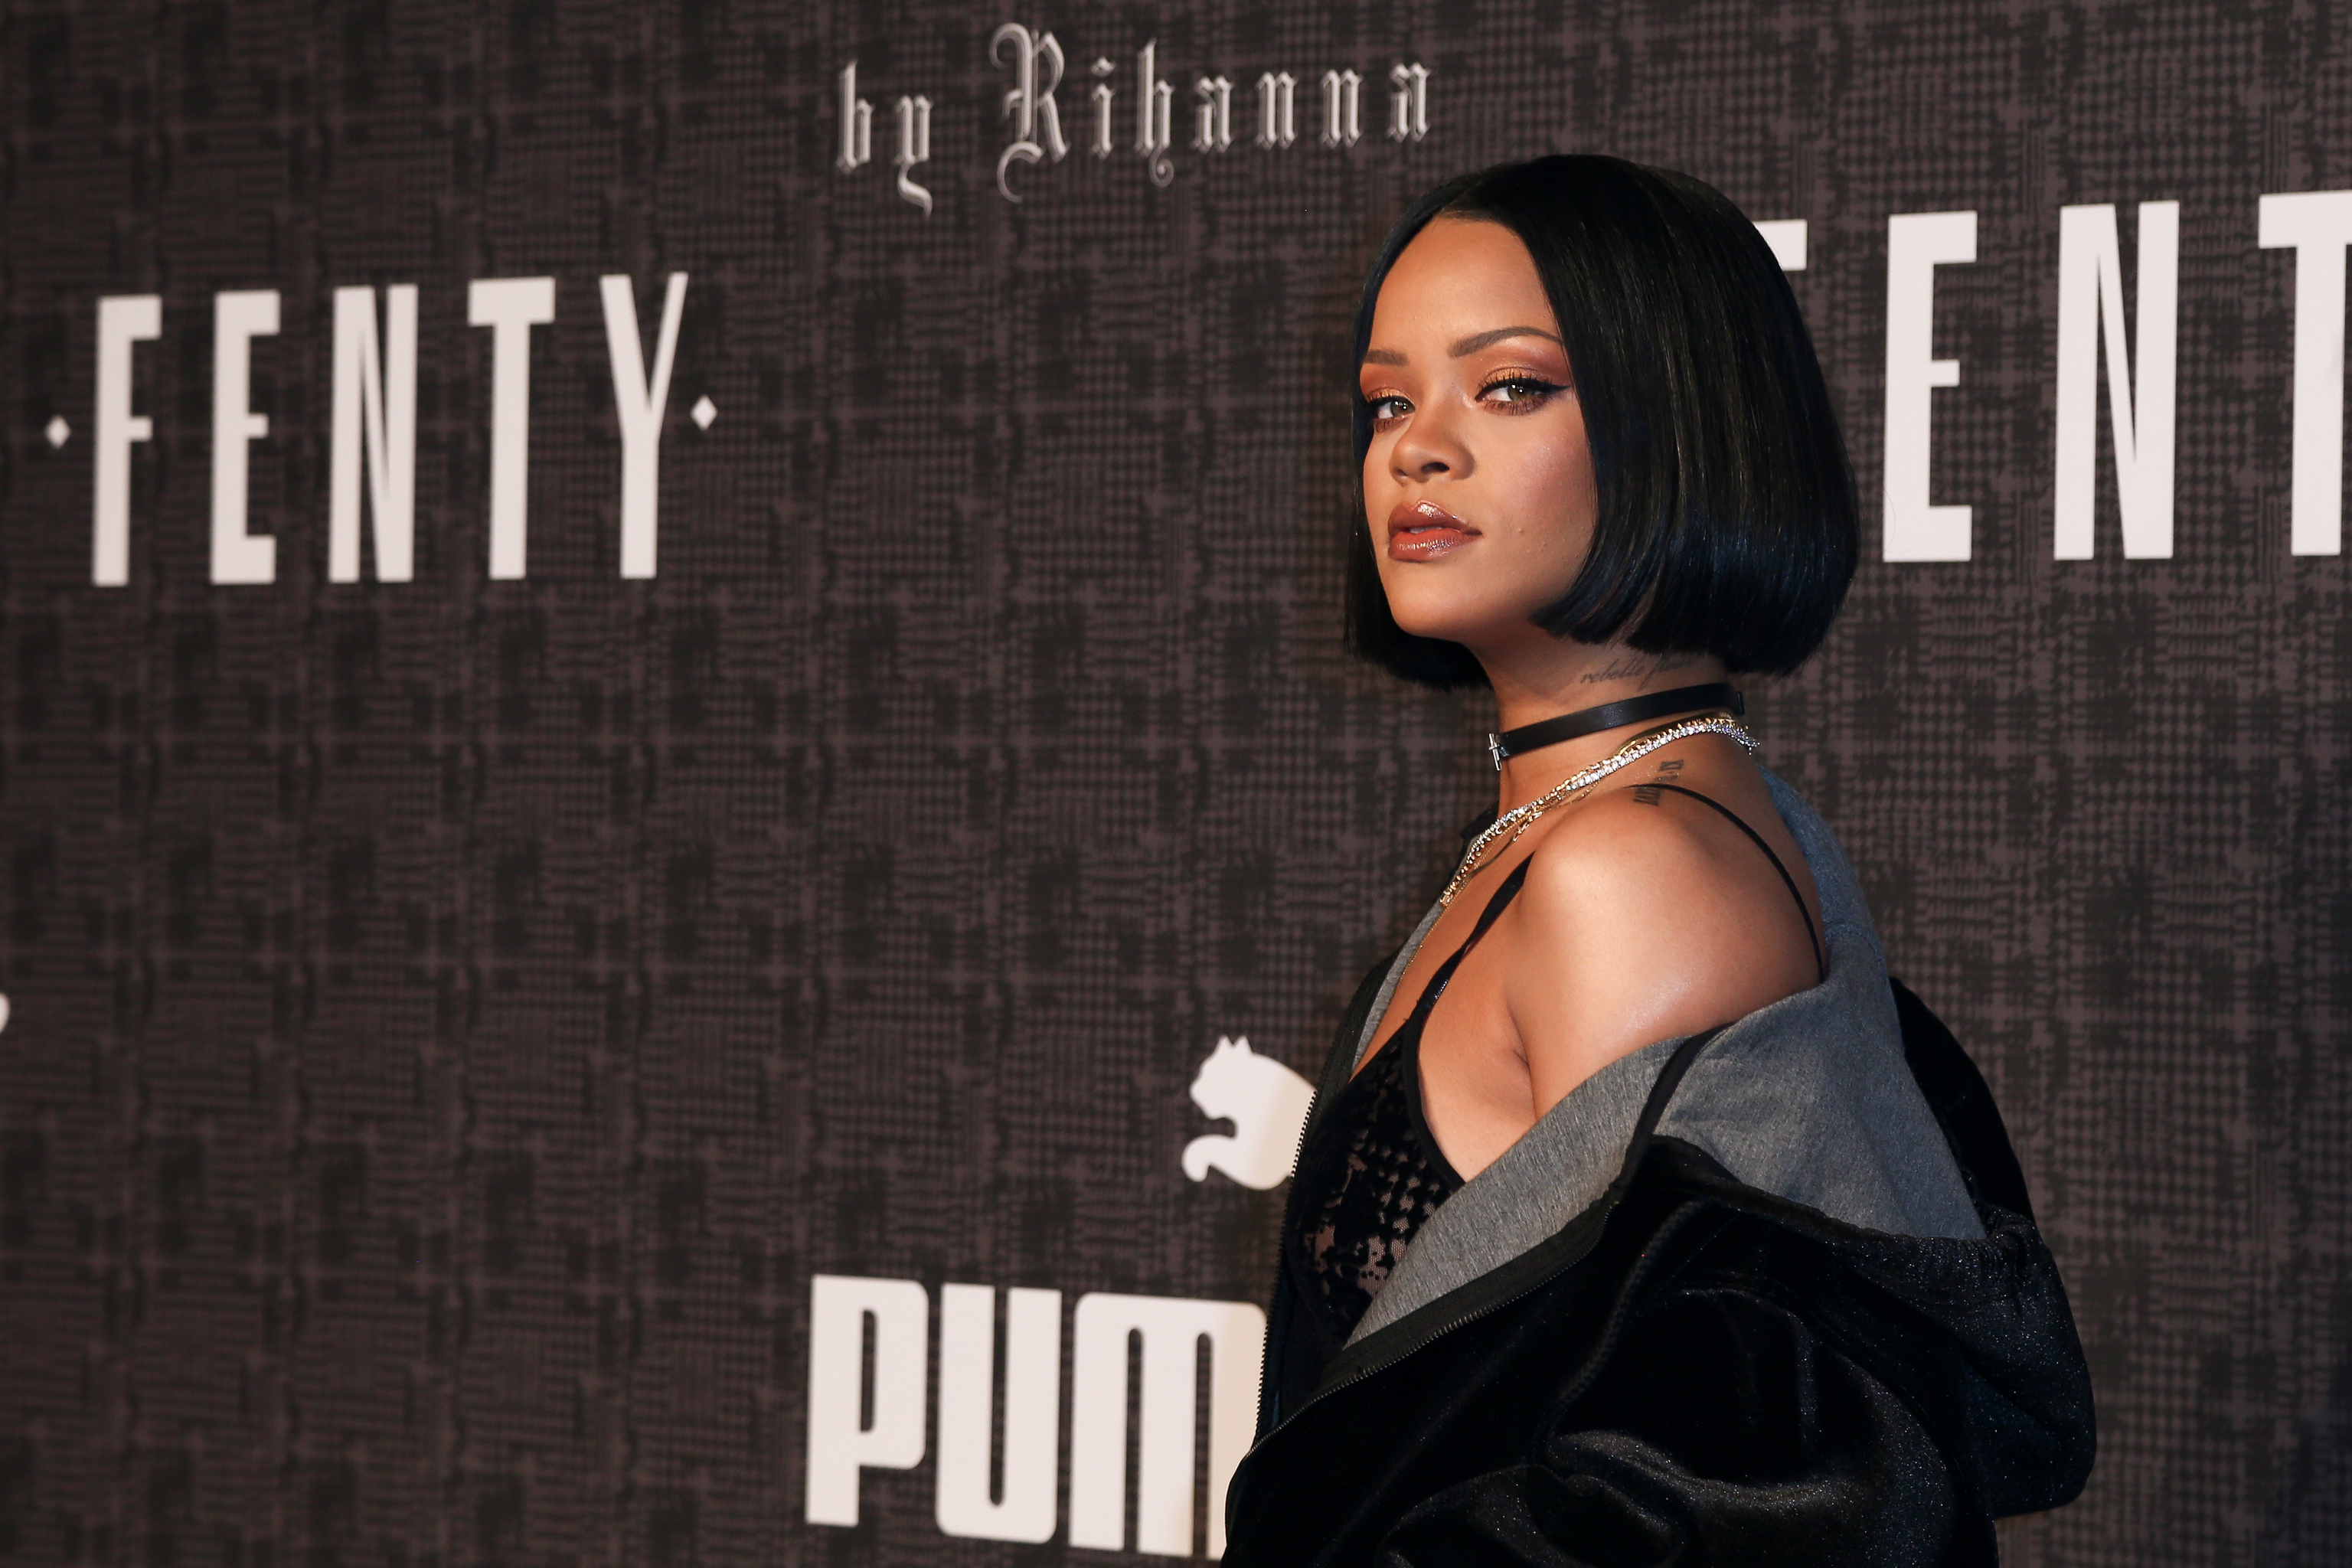 Rihanna at New York Fashion Week in 2016.